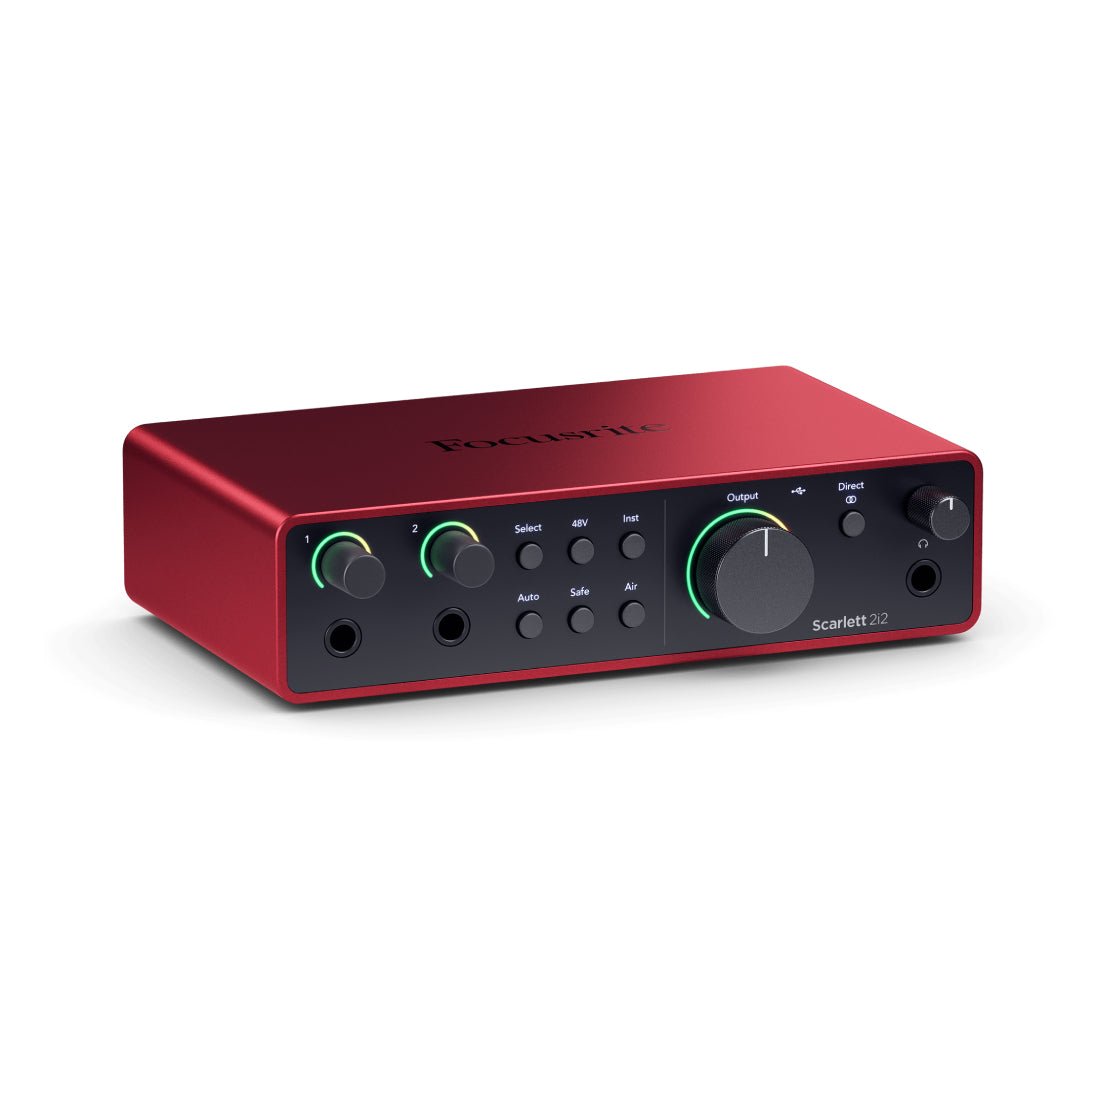 Focusrite Scarlett 2i2 Studio 4th Generation Audio Interface - Red - جهاز تسجيل - Store 974 | ستور ٩٧٤